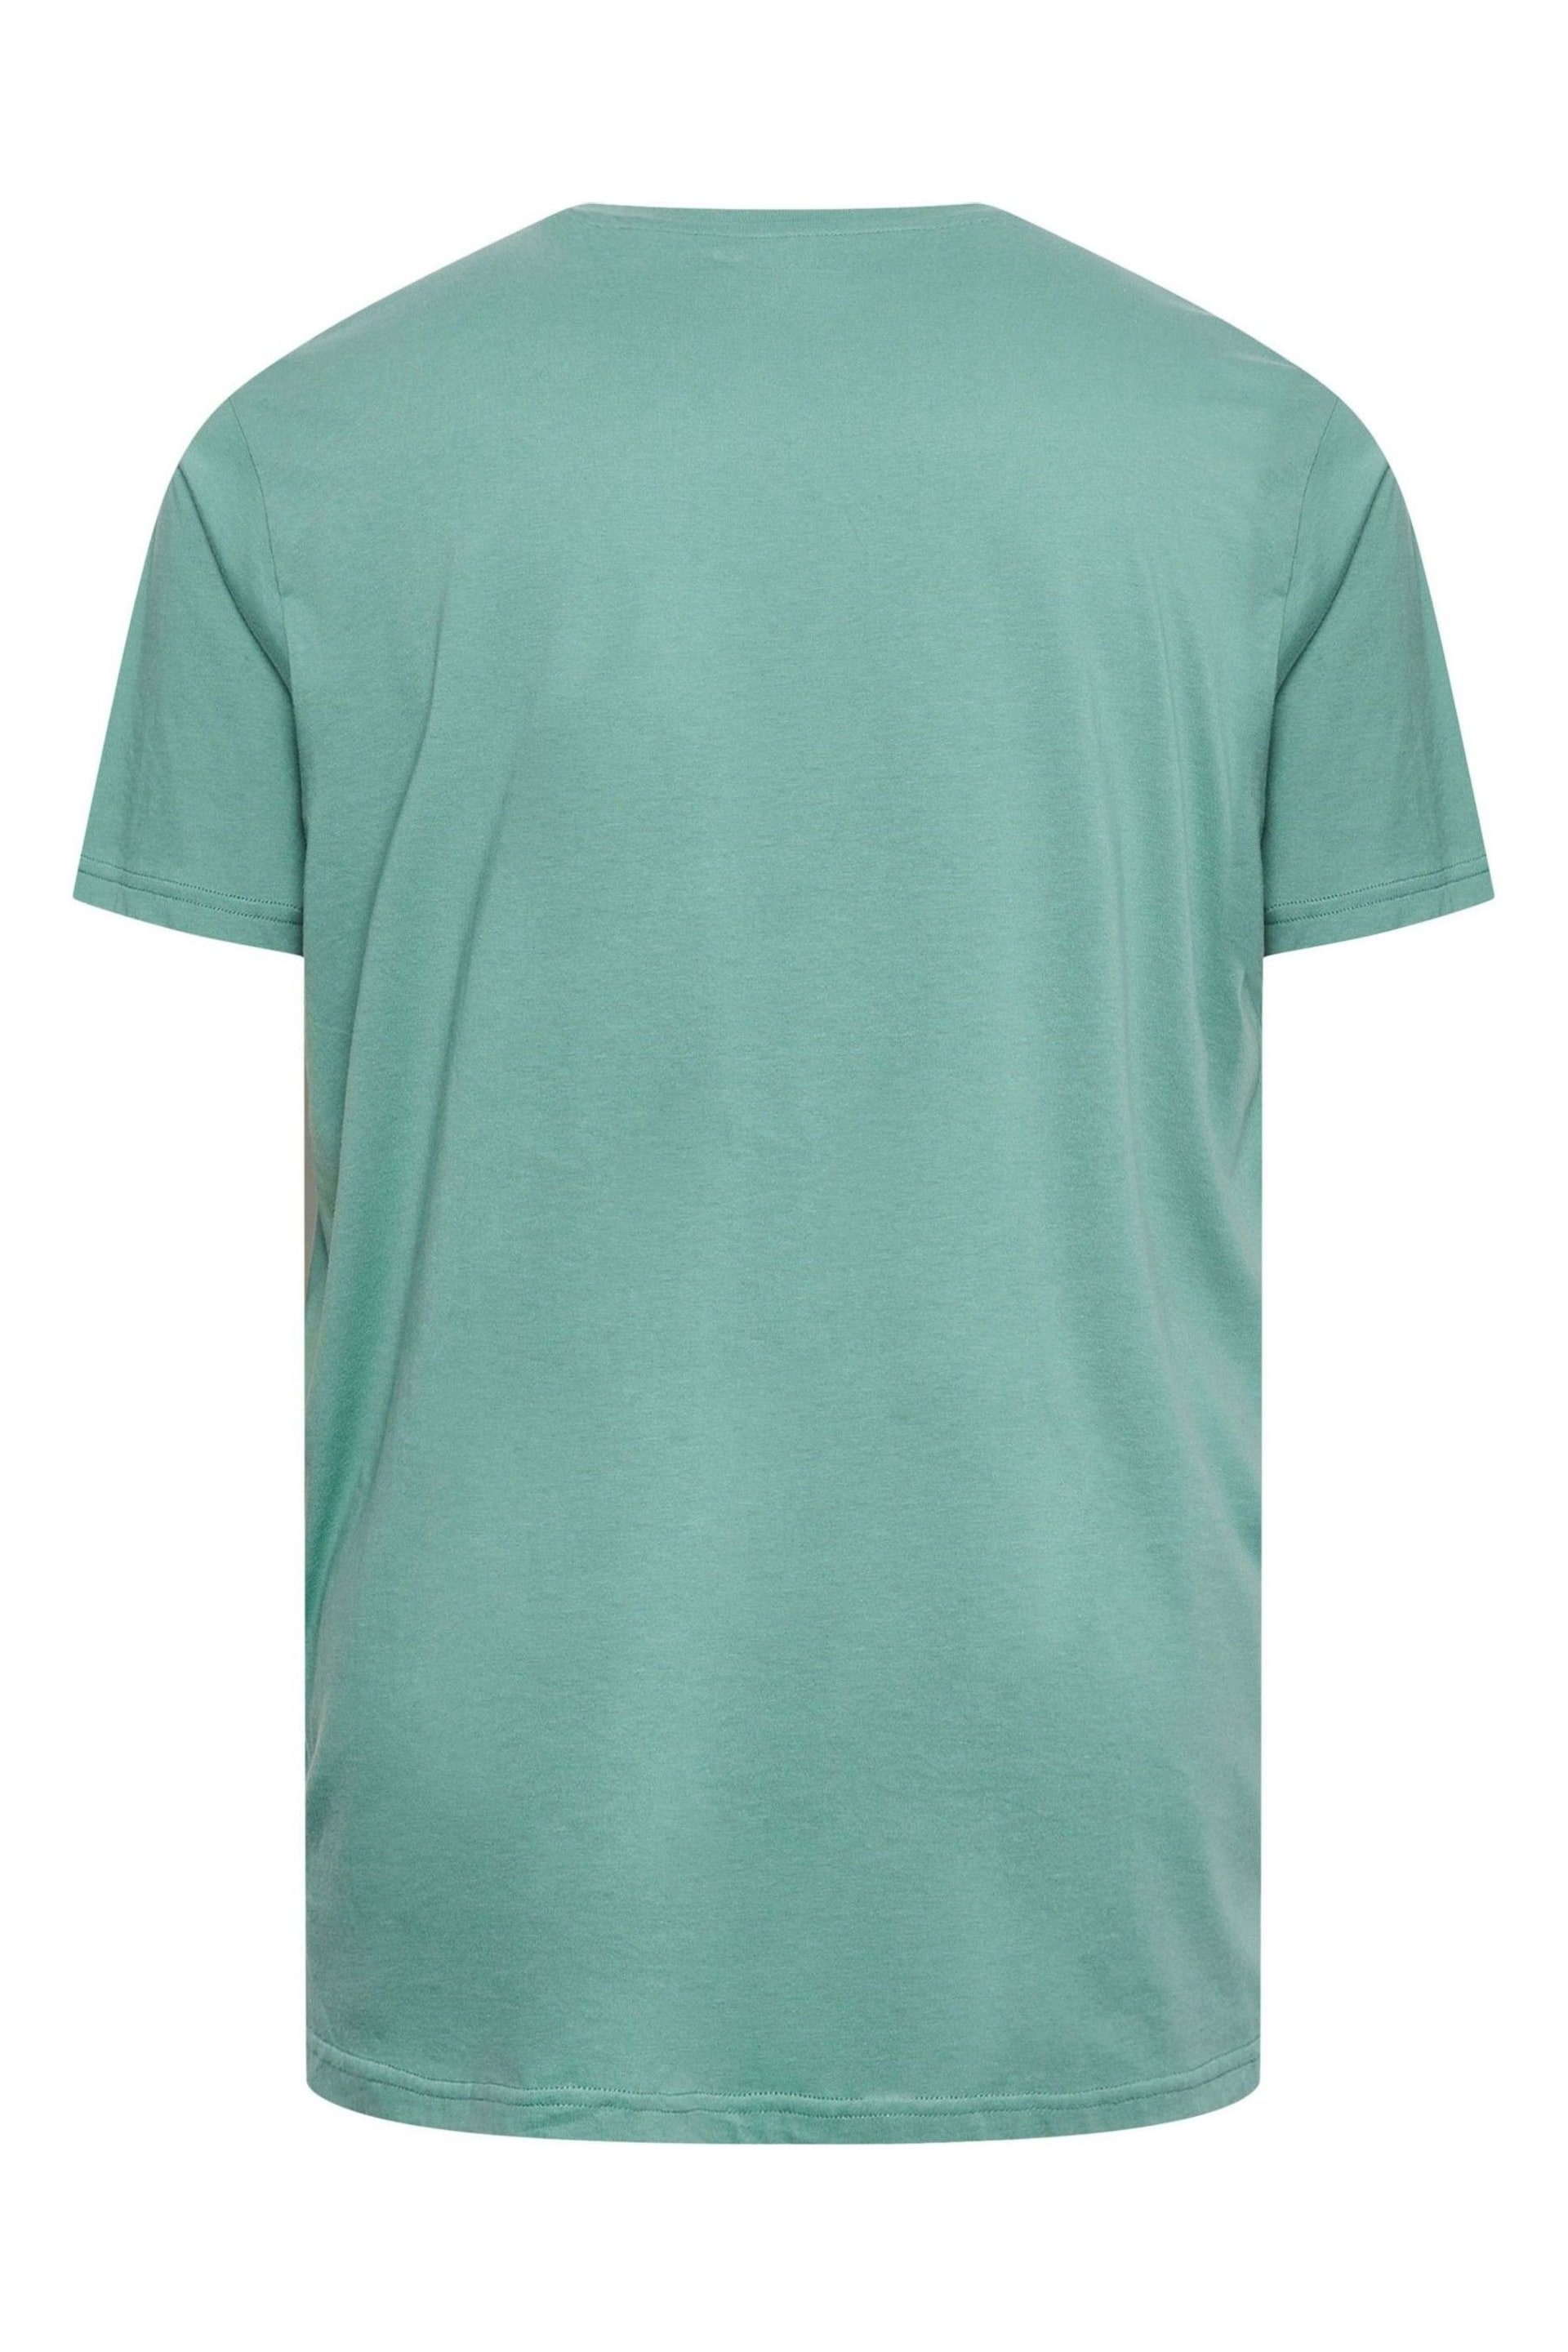 BadRhino Big & Tall Blue Santa Monica T-Shirt - Image 4 of 4